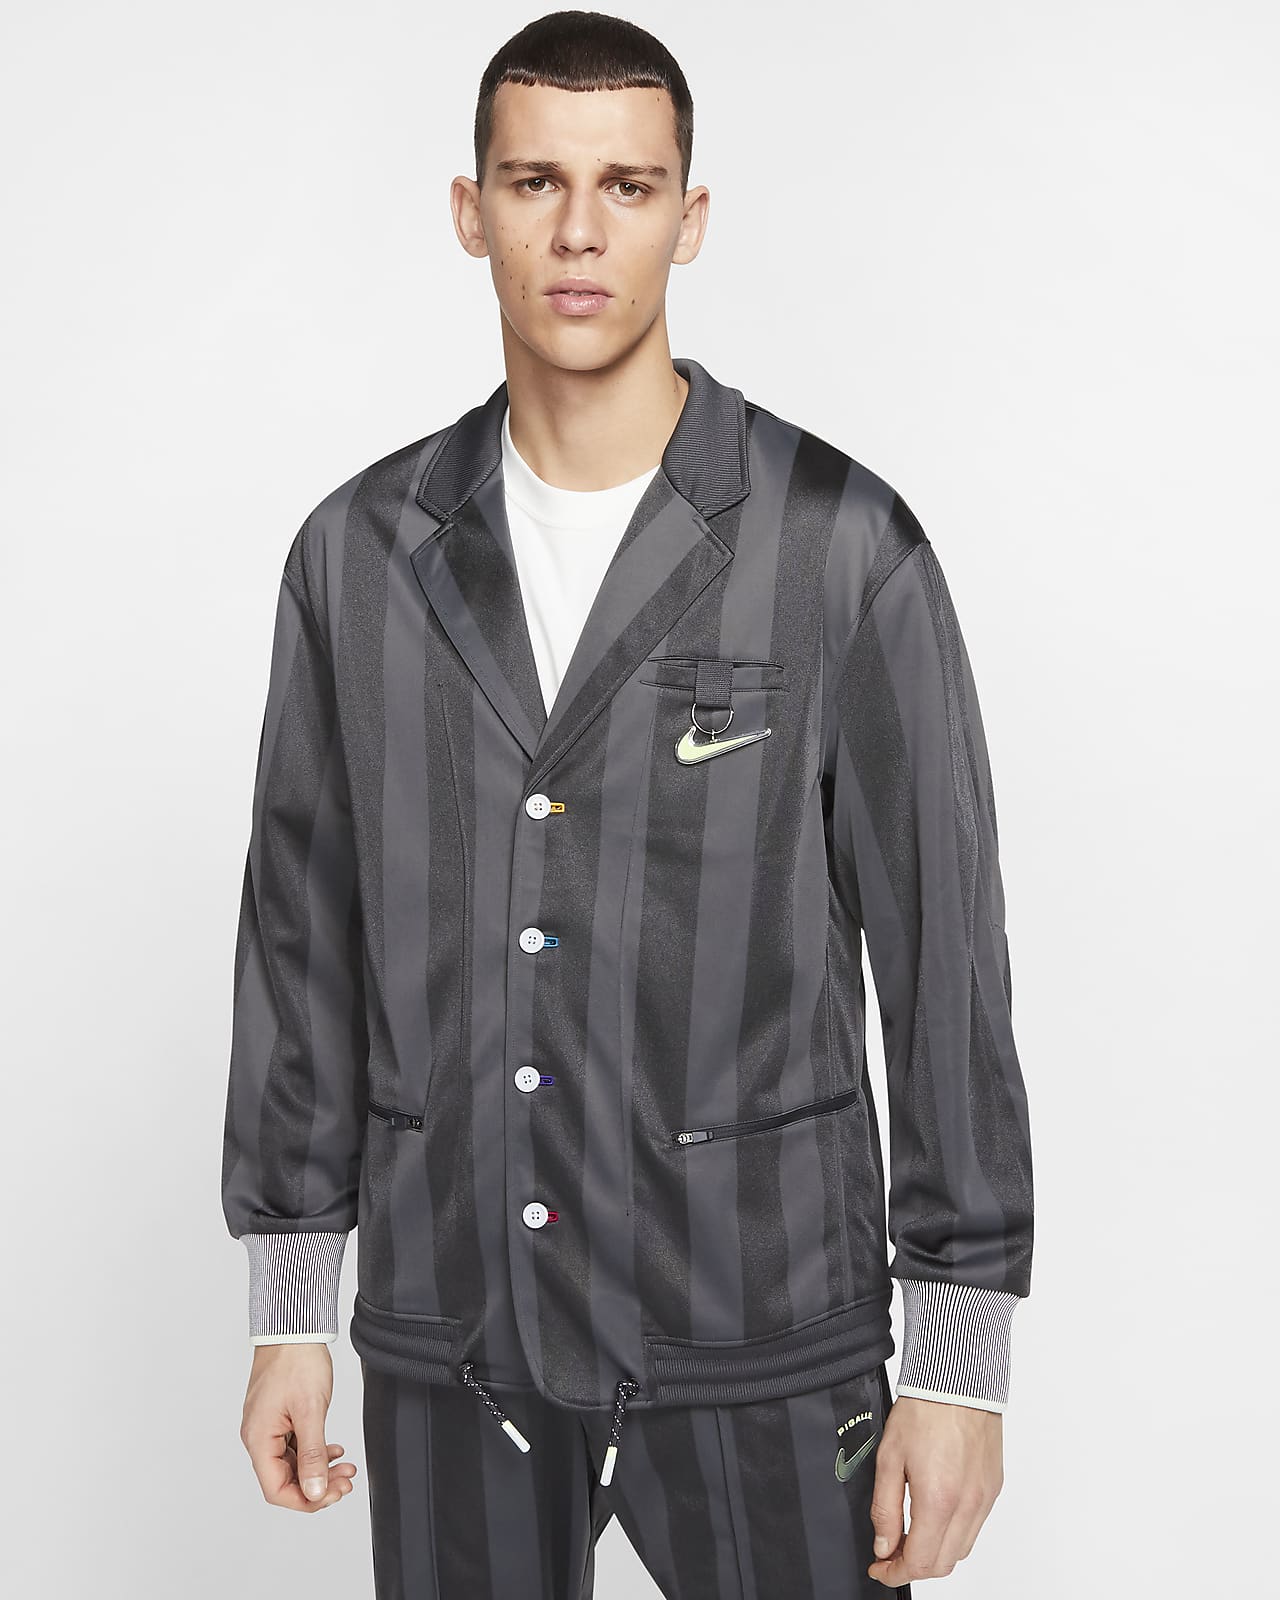 Nike x Pigalle Men's Tracksuit Jacket 